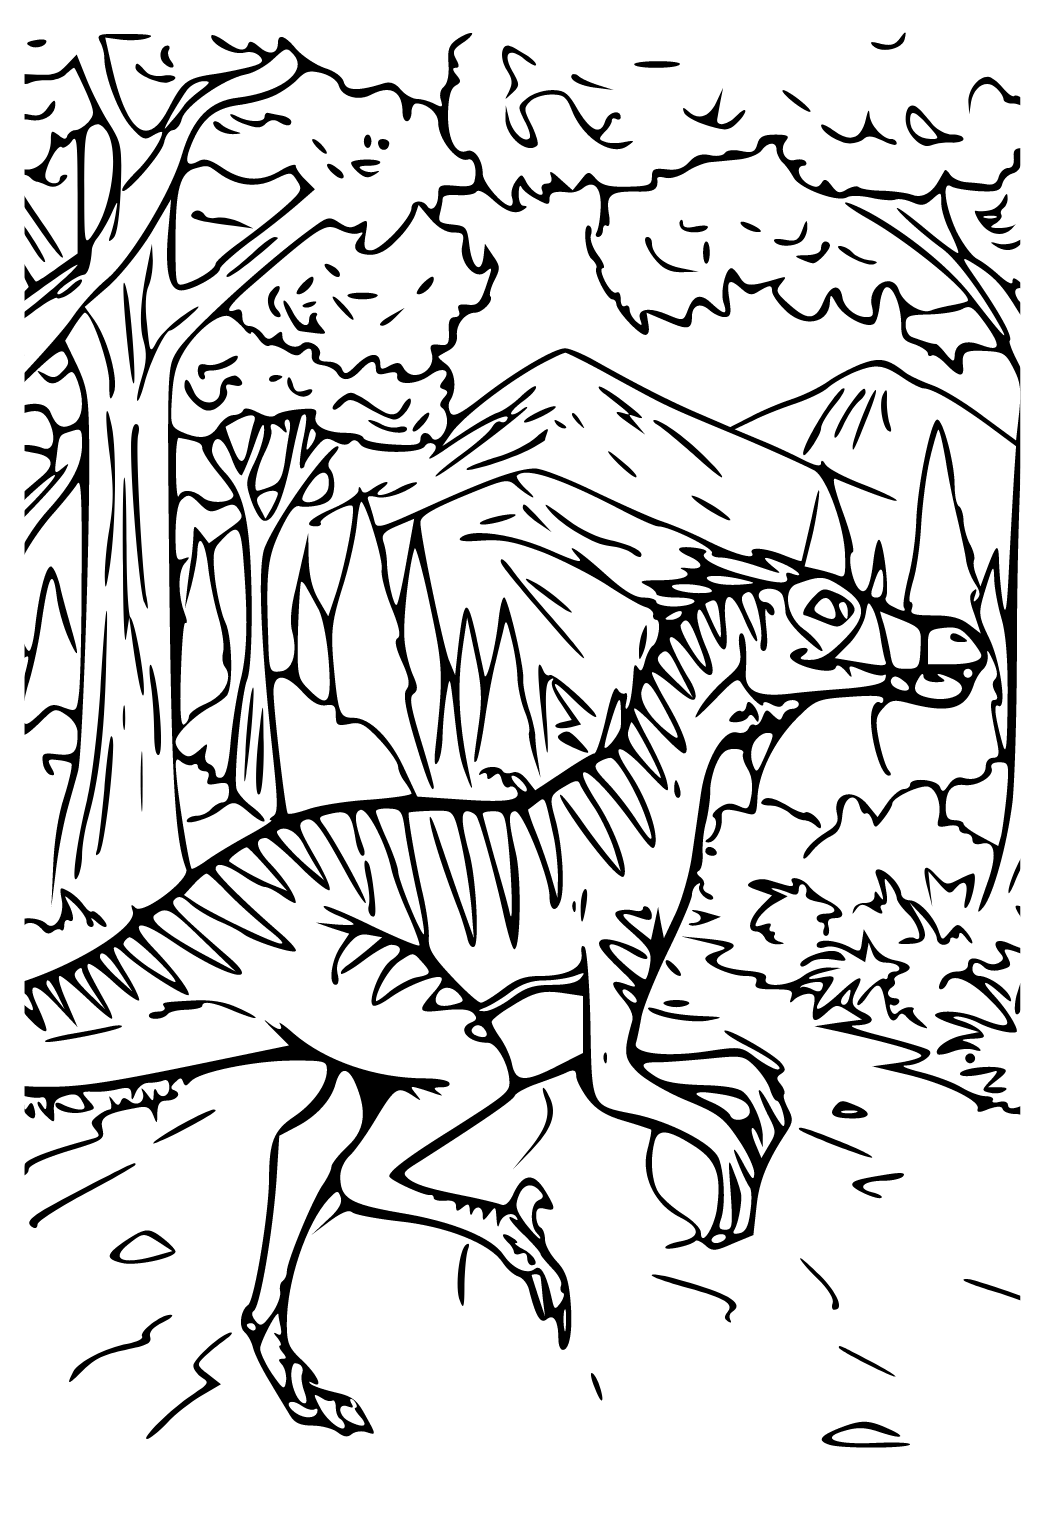 Welociraptor